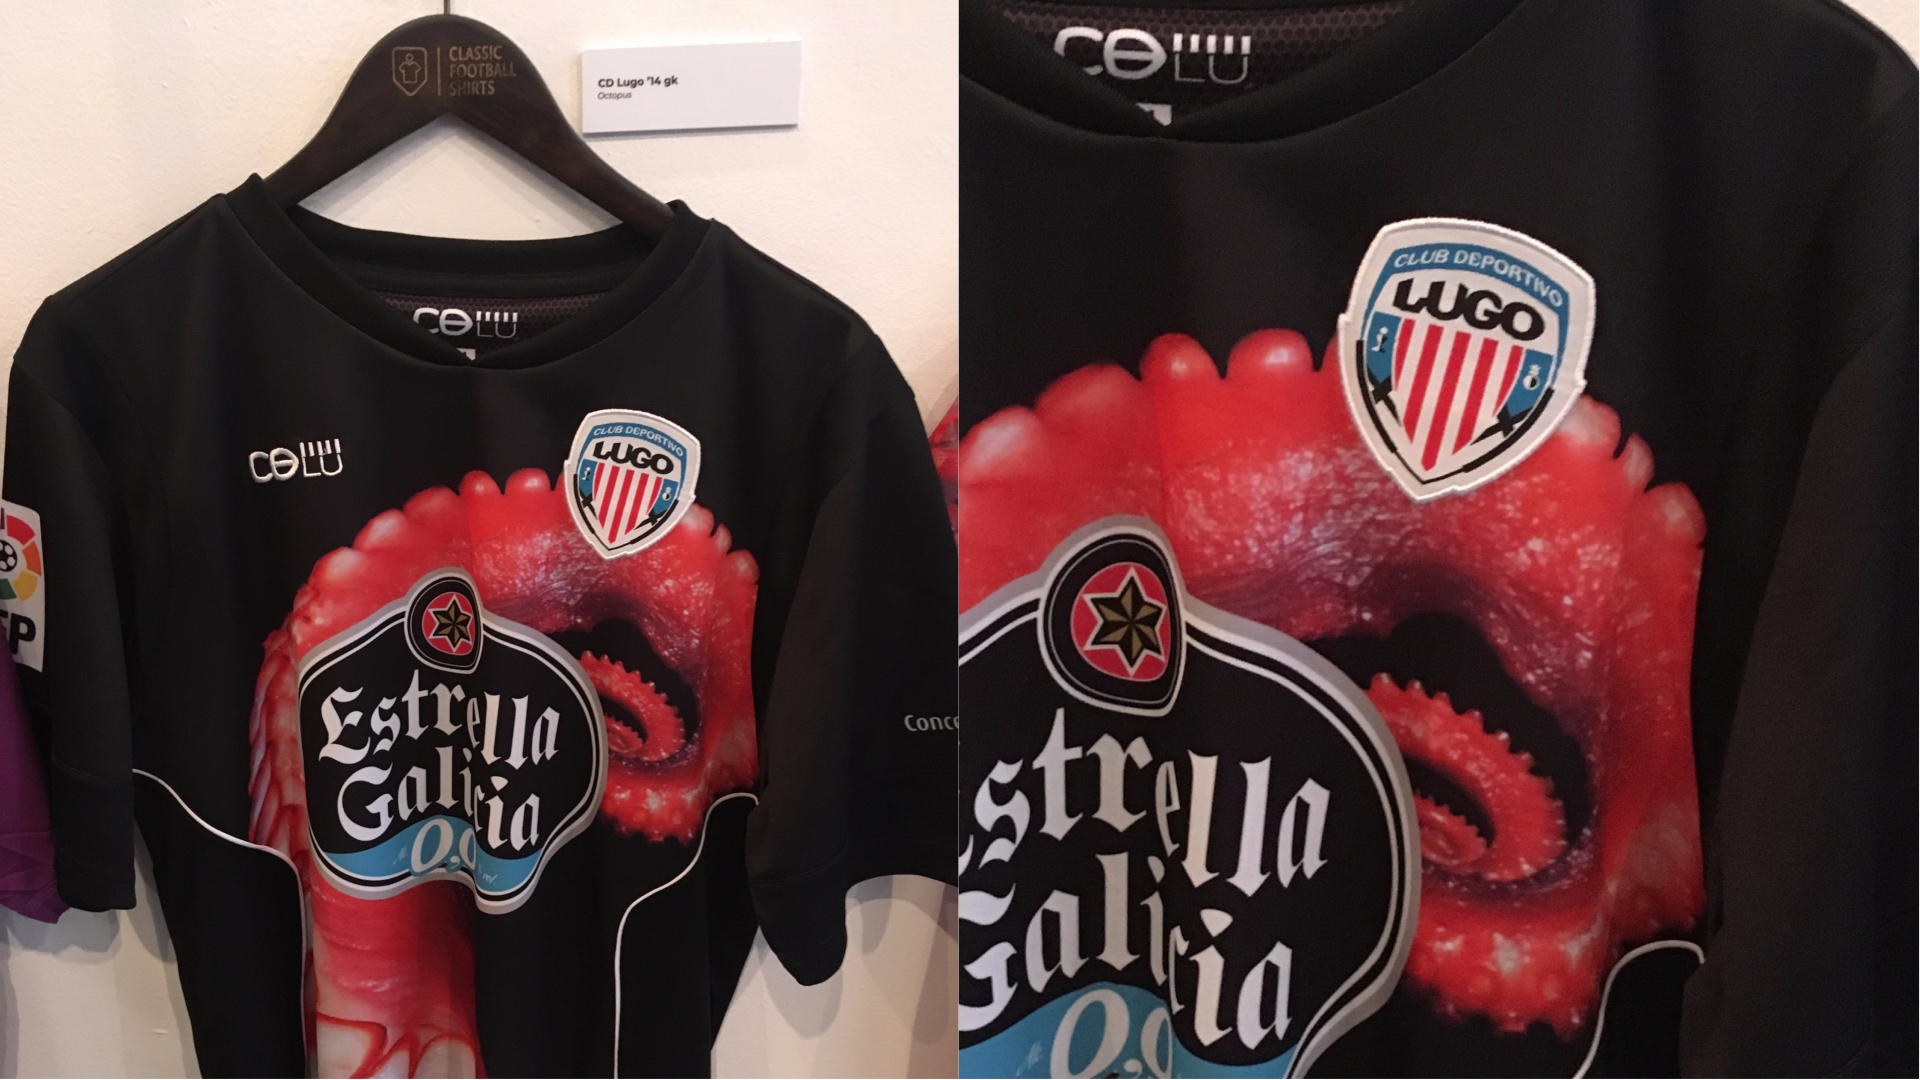 A CD Lugo goalkeeper shirt from the 2014/15 season